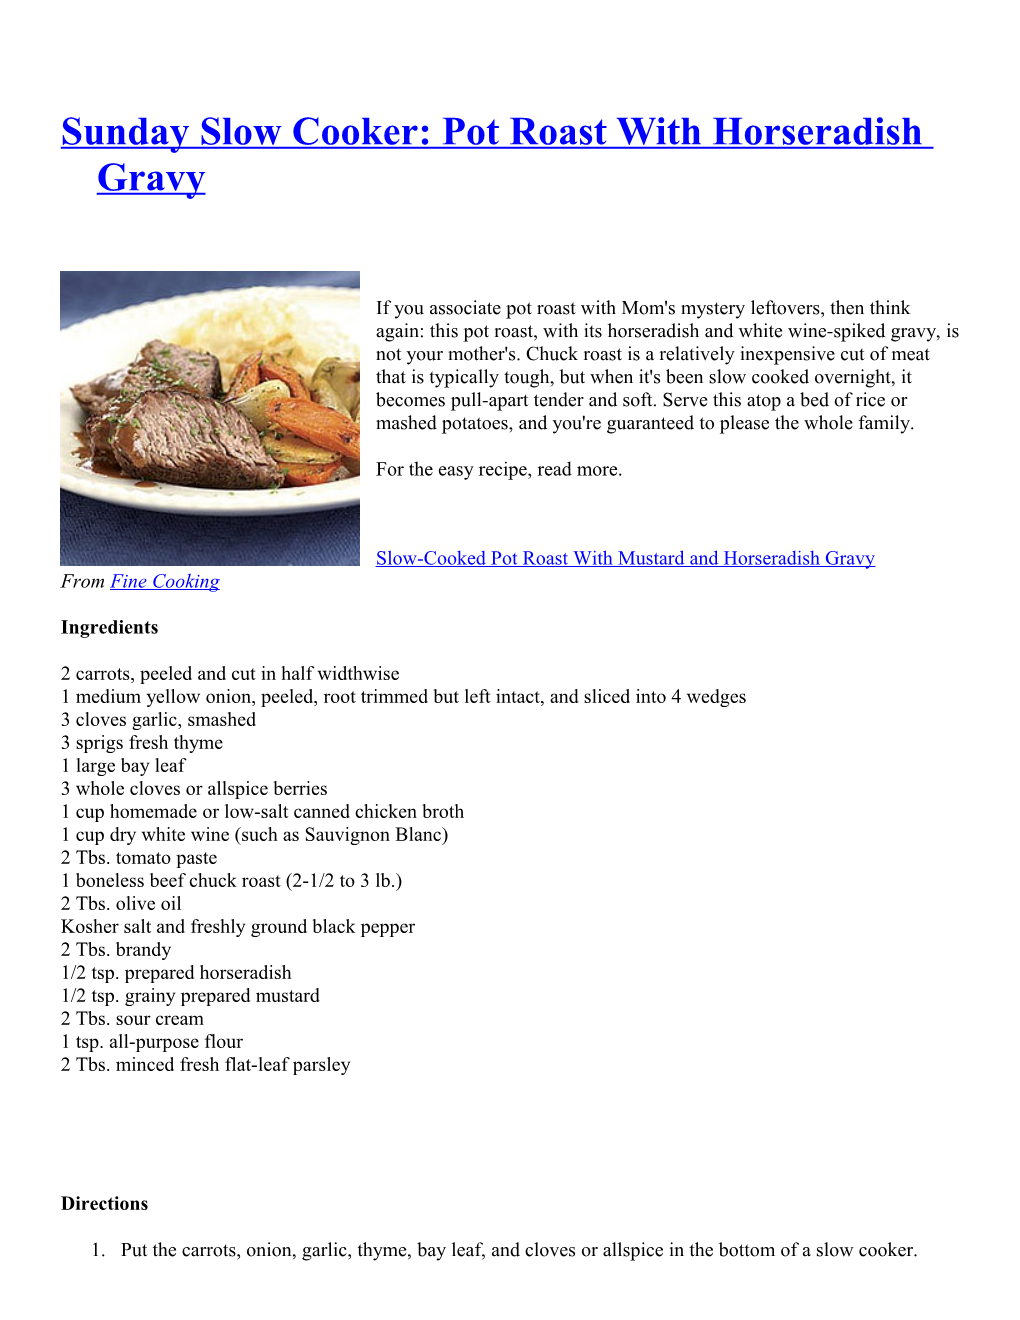 Sunday Slow Cooker: Pot Roast with Horseradish Gravy